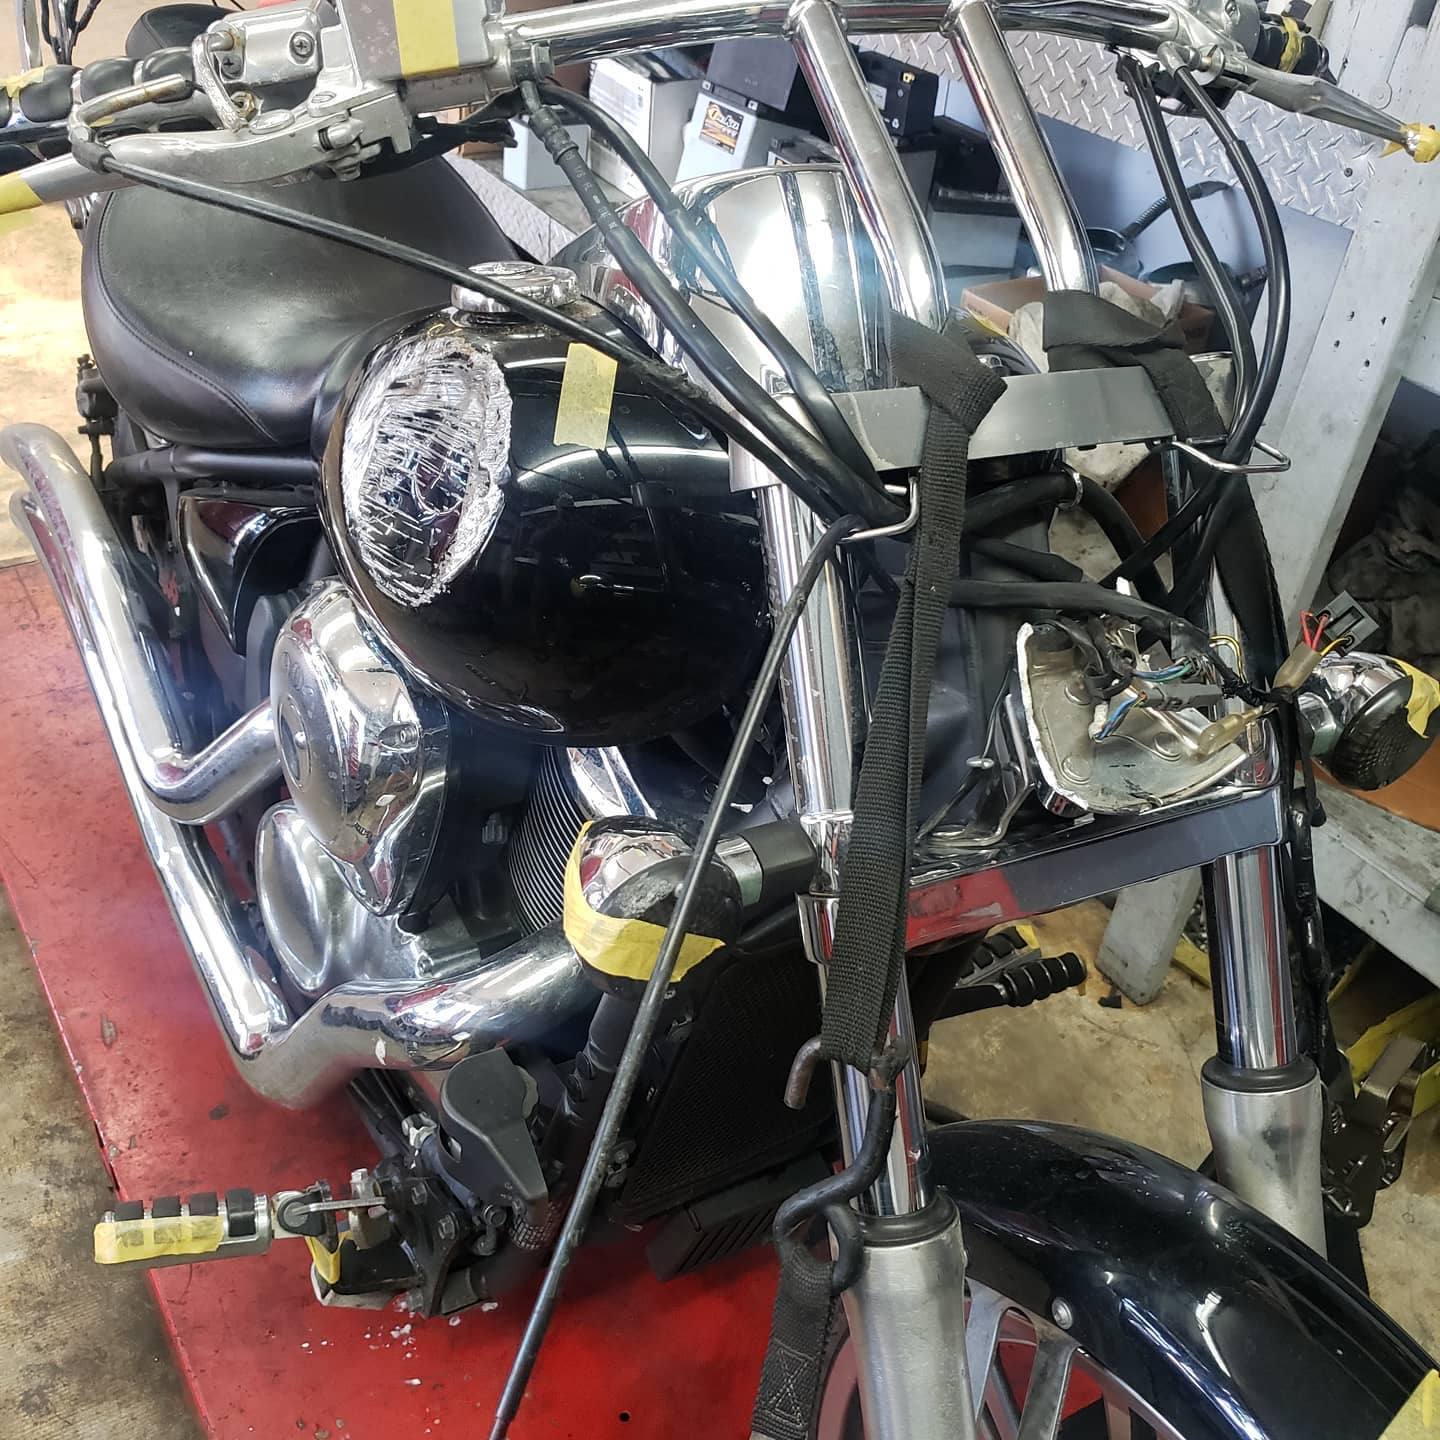 doing a repair on a Kawasaki